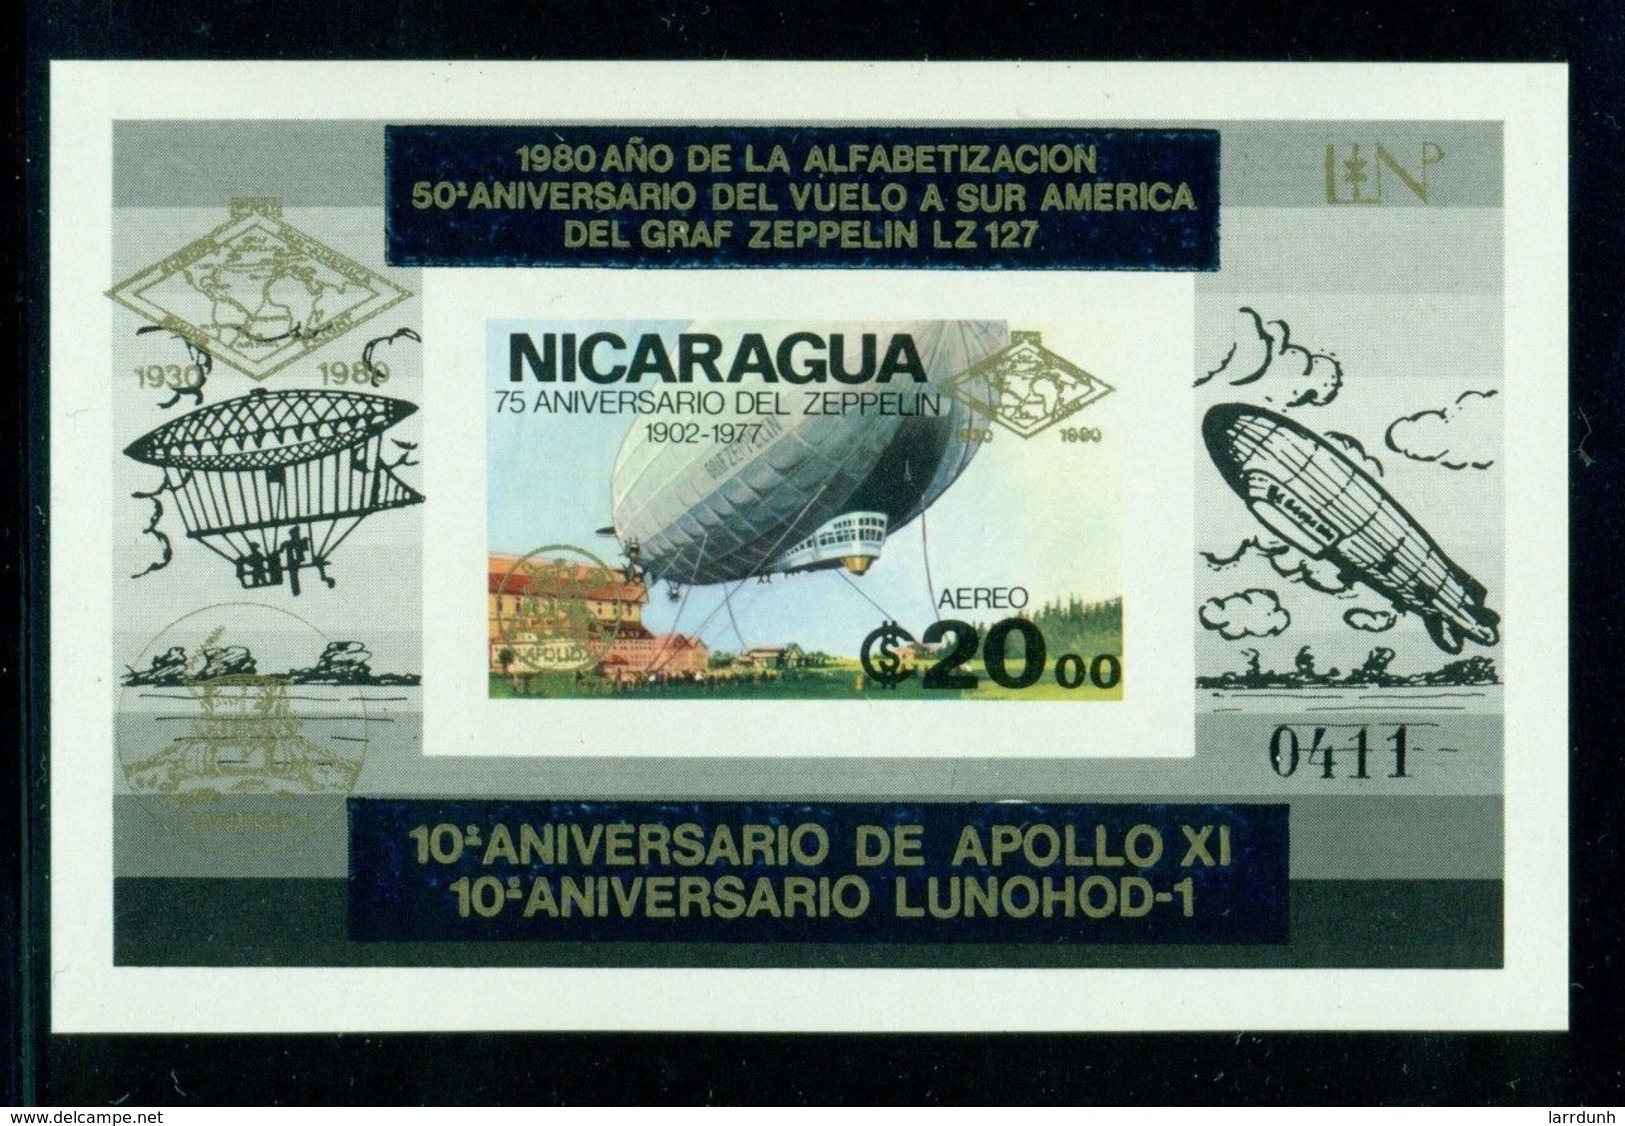 Nicaragua  Zeppelin Ready For Flight Ovpt Gold Apollo XI Lunohod-1 10th Anniv Souvenir Sheet Block Imperf MNH 1977 A04s - Nicaragua